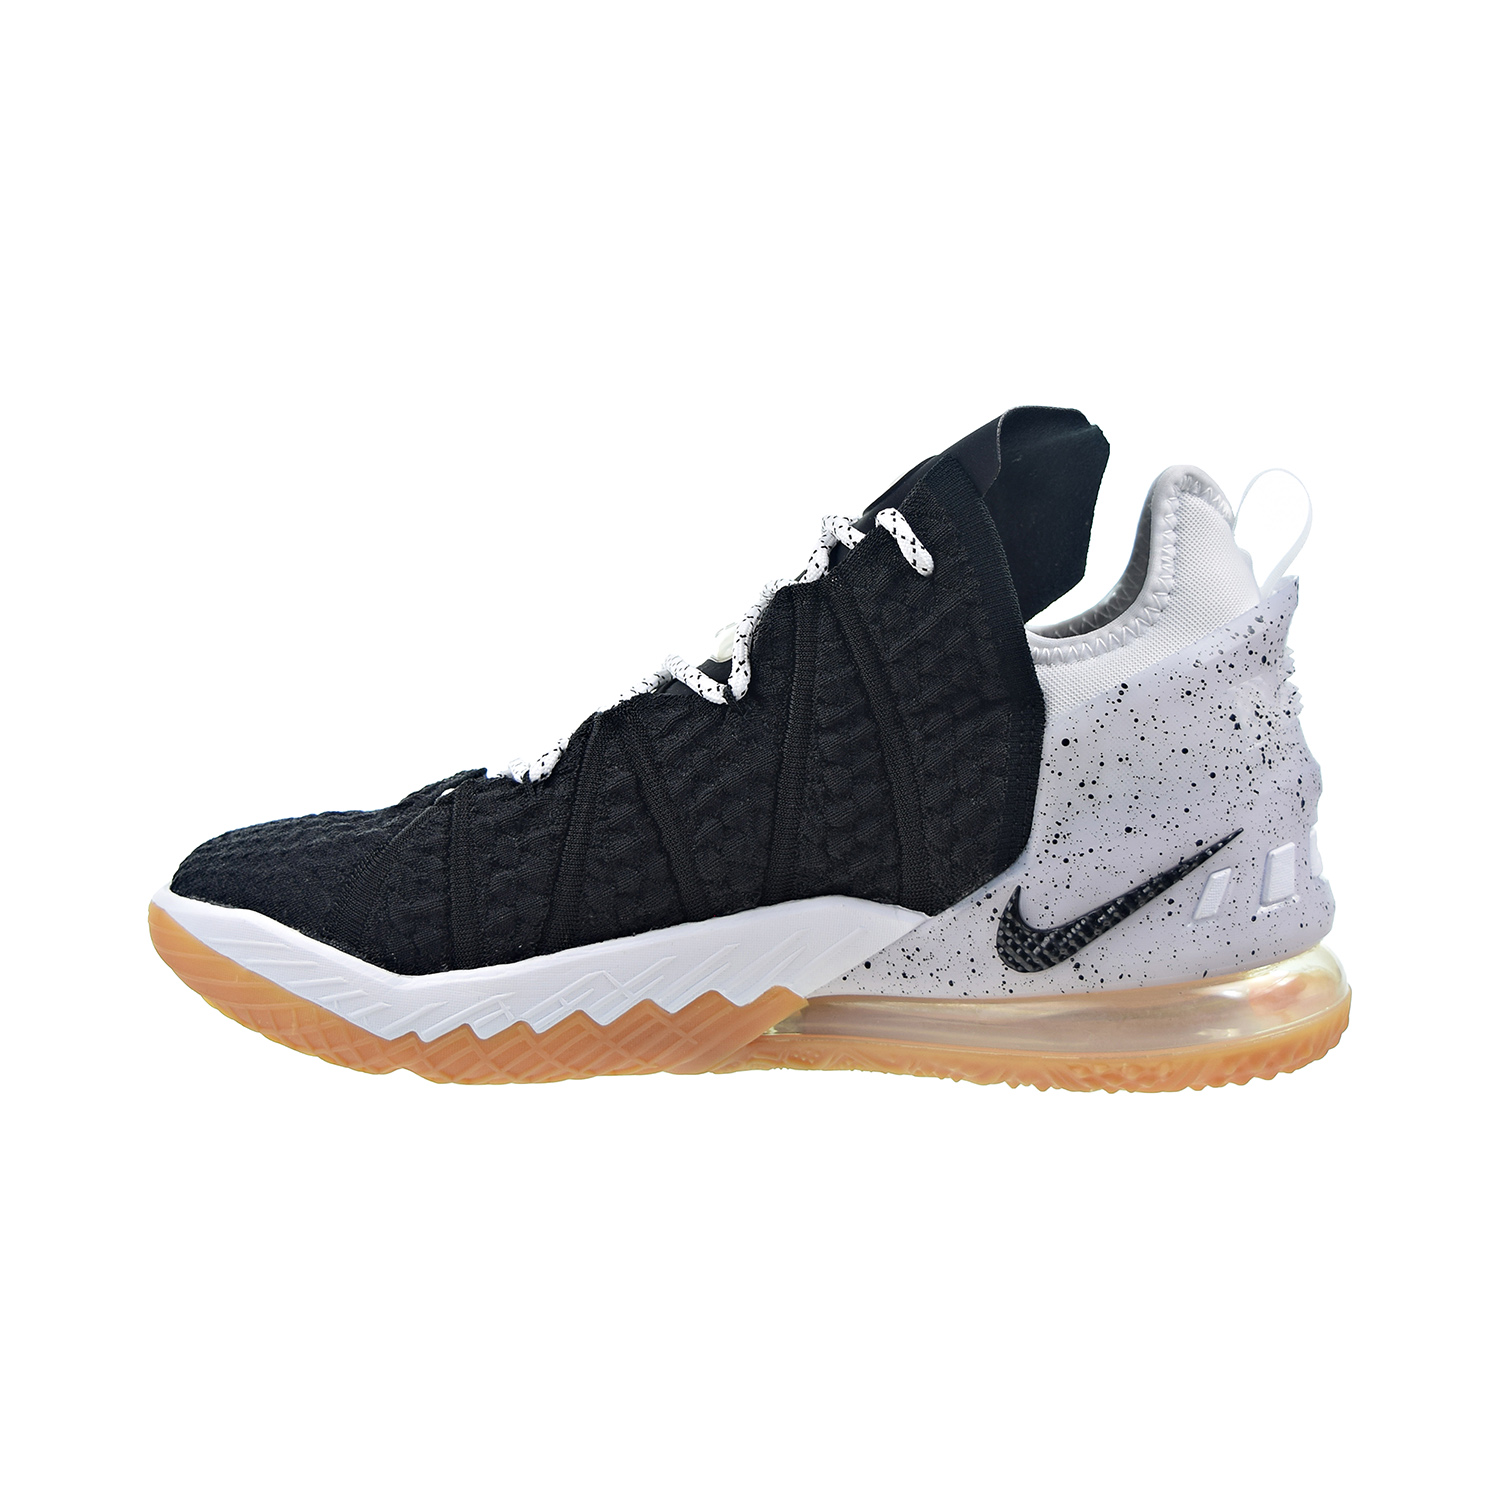 Nike Lebron XVIII Men's Basketball Shoes Black-White-Gum CQ9283-007 | eBay